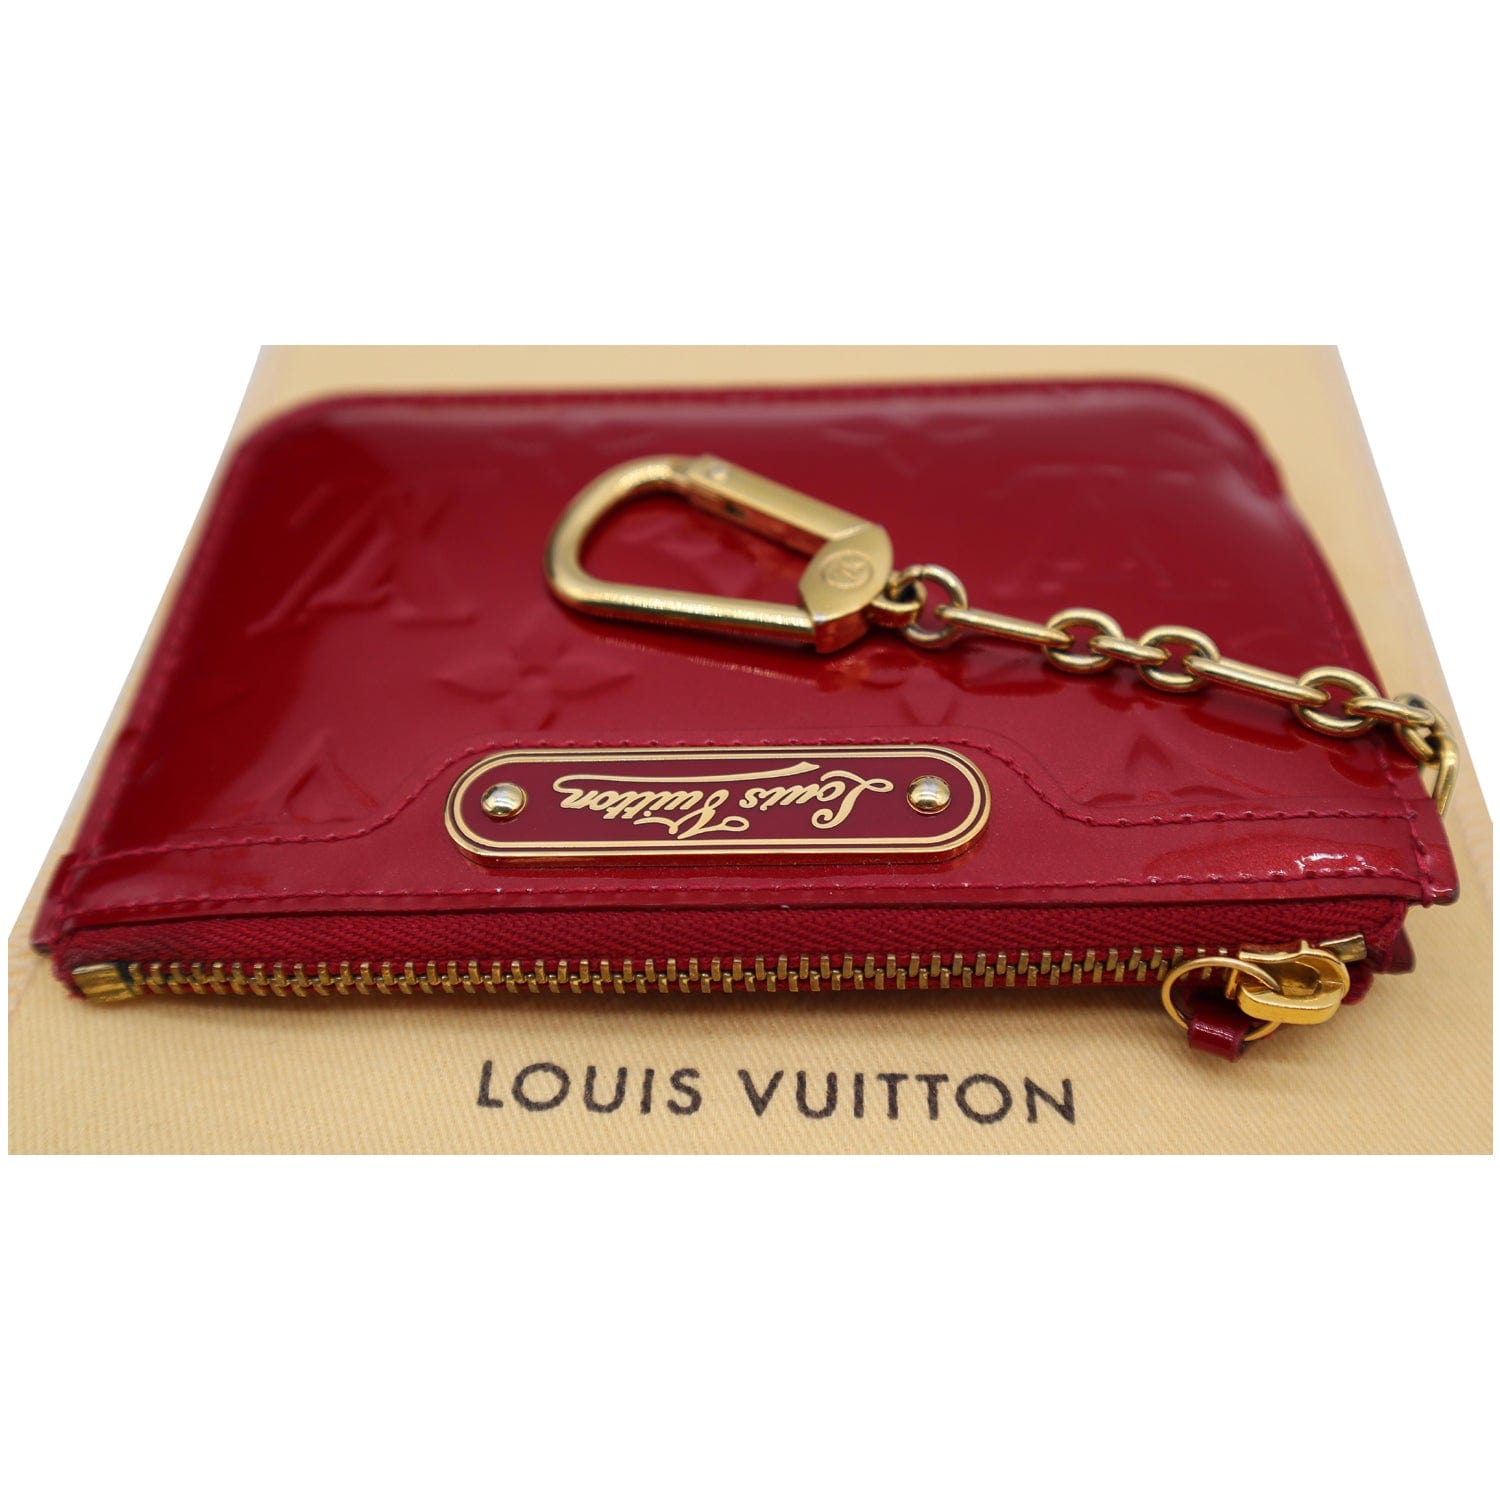 100% Authenticity Guaranteed - Louis Vuitton Monogram Vernis 4 Key